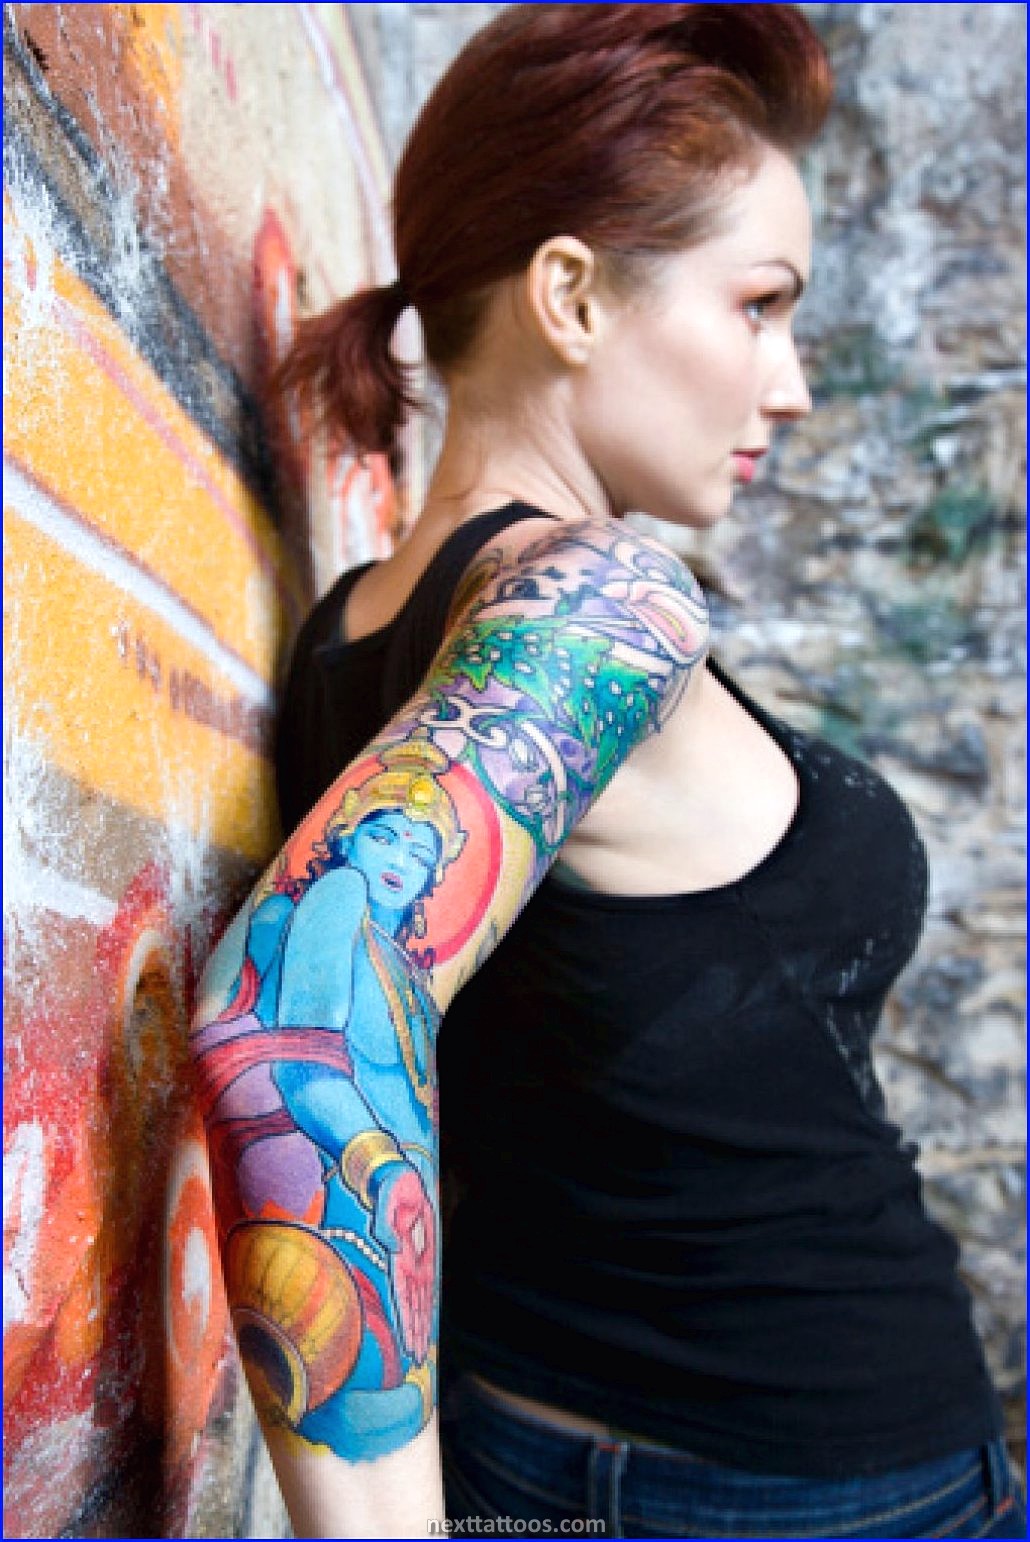 Sleeve Tattoo Ideas For Women